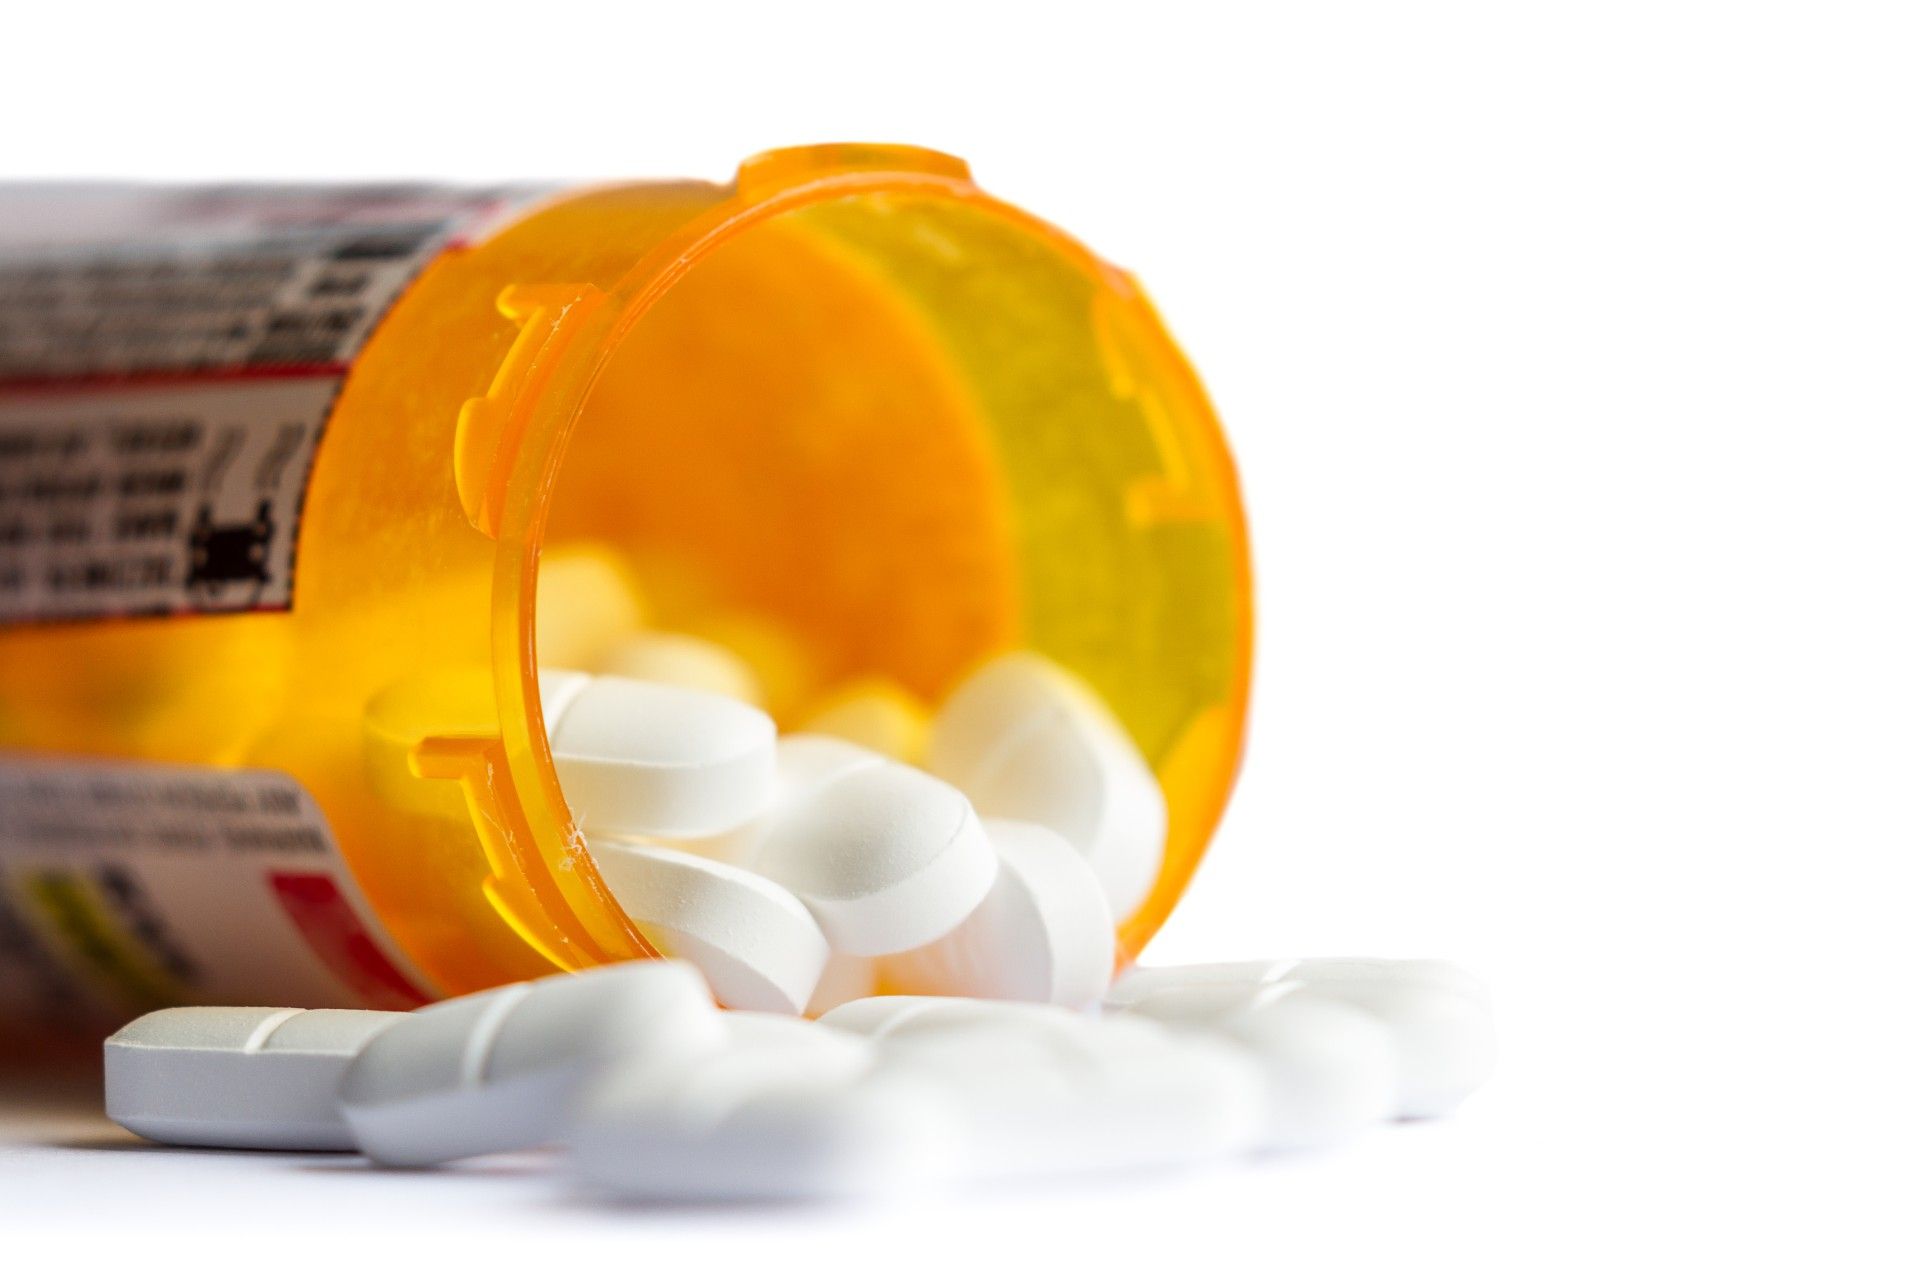 White pills spill out of overturned prescription bottle - opioid crisis